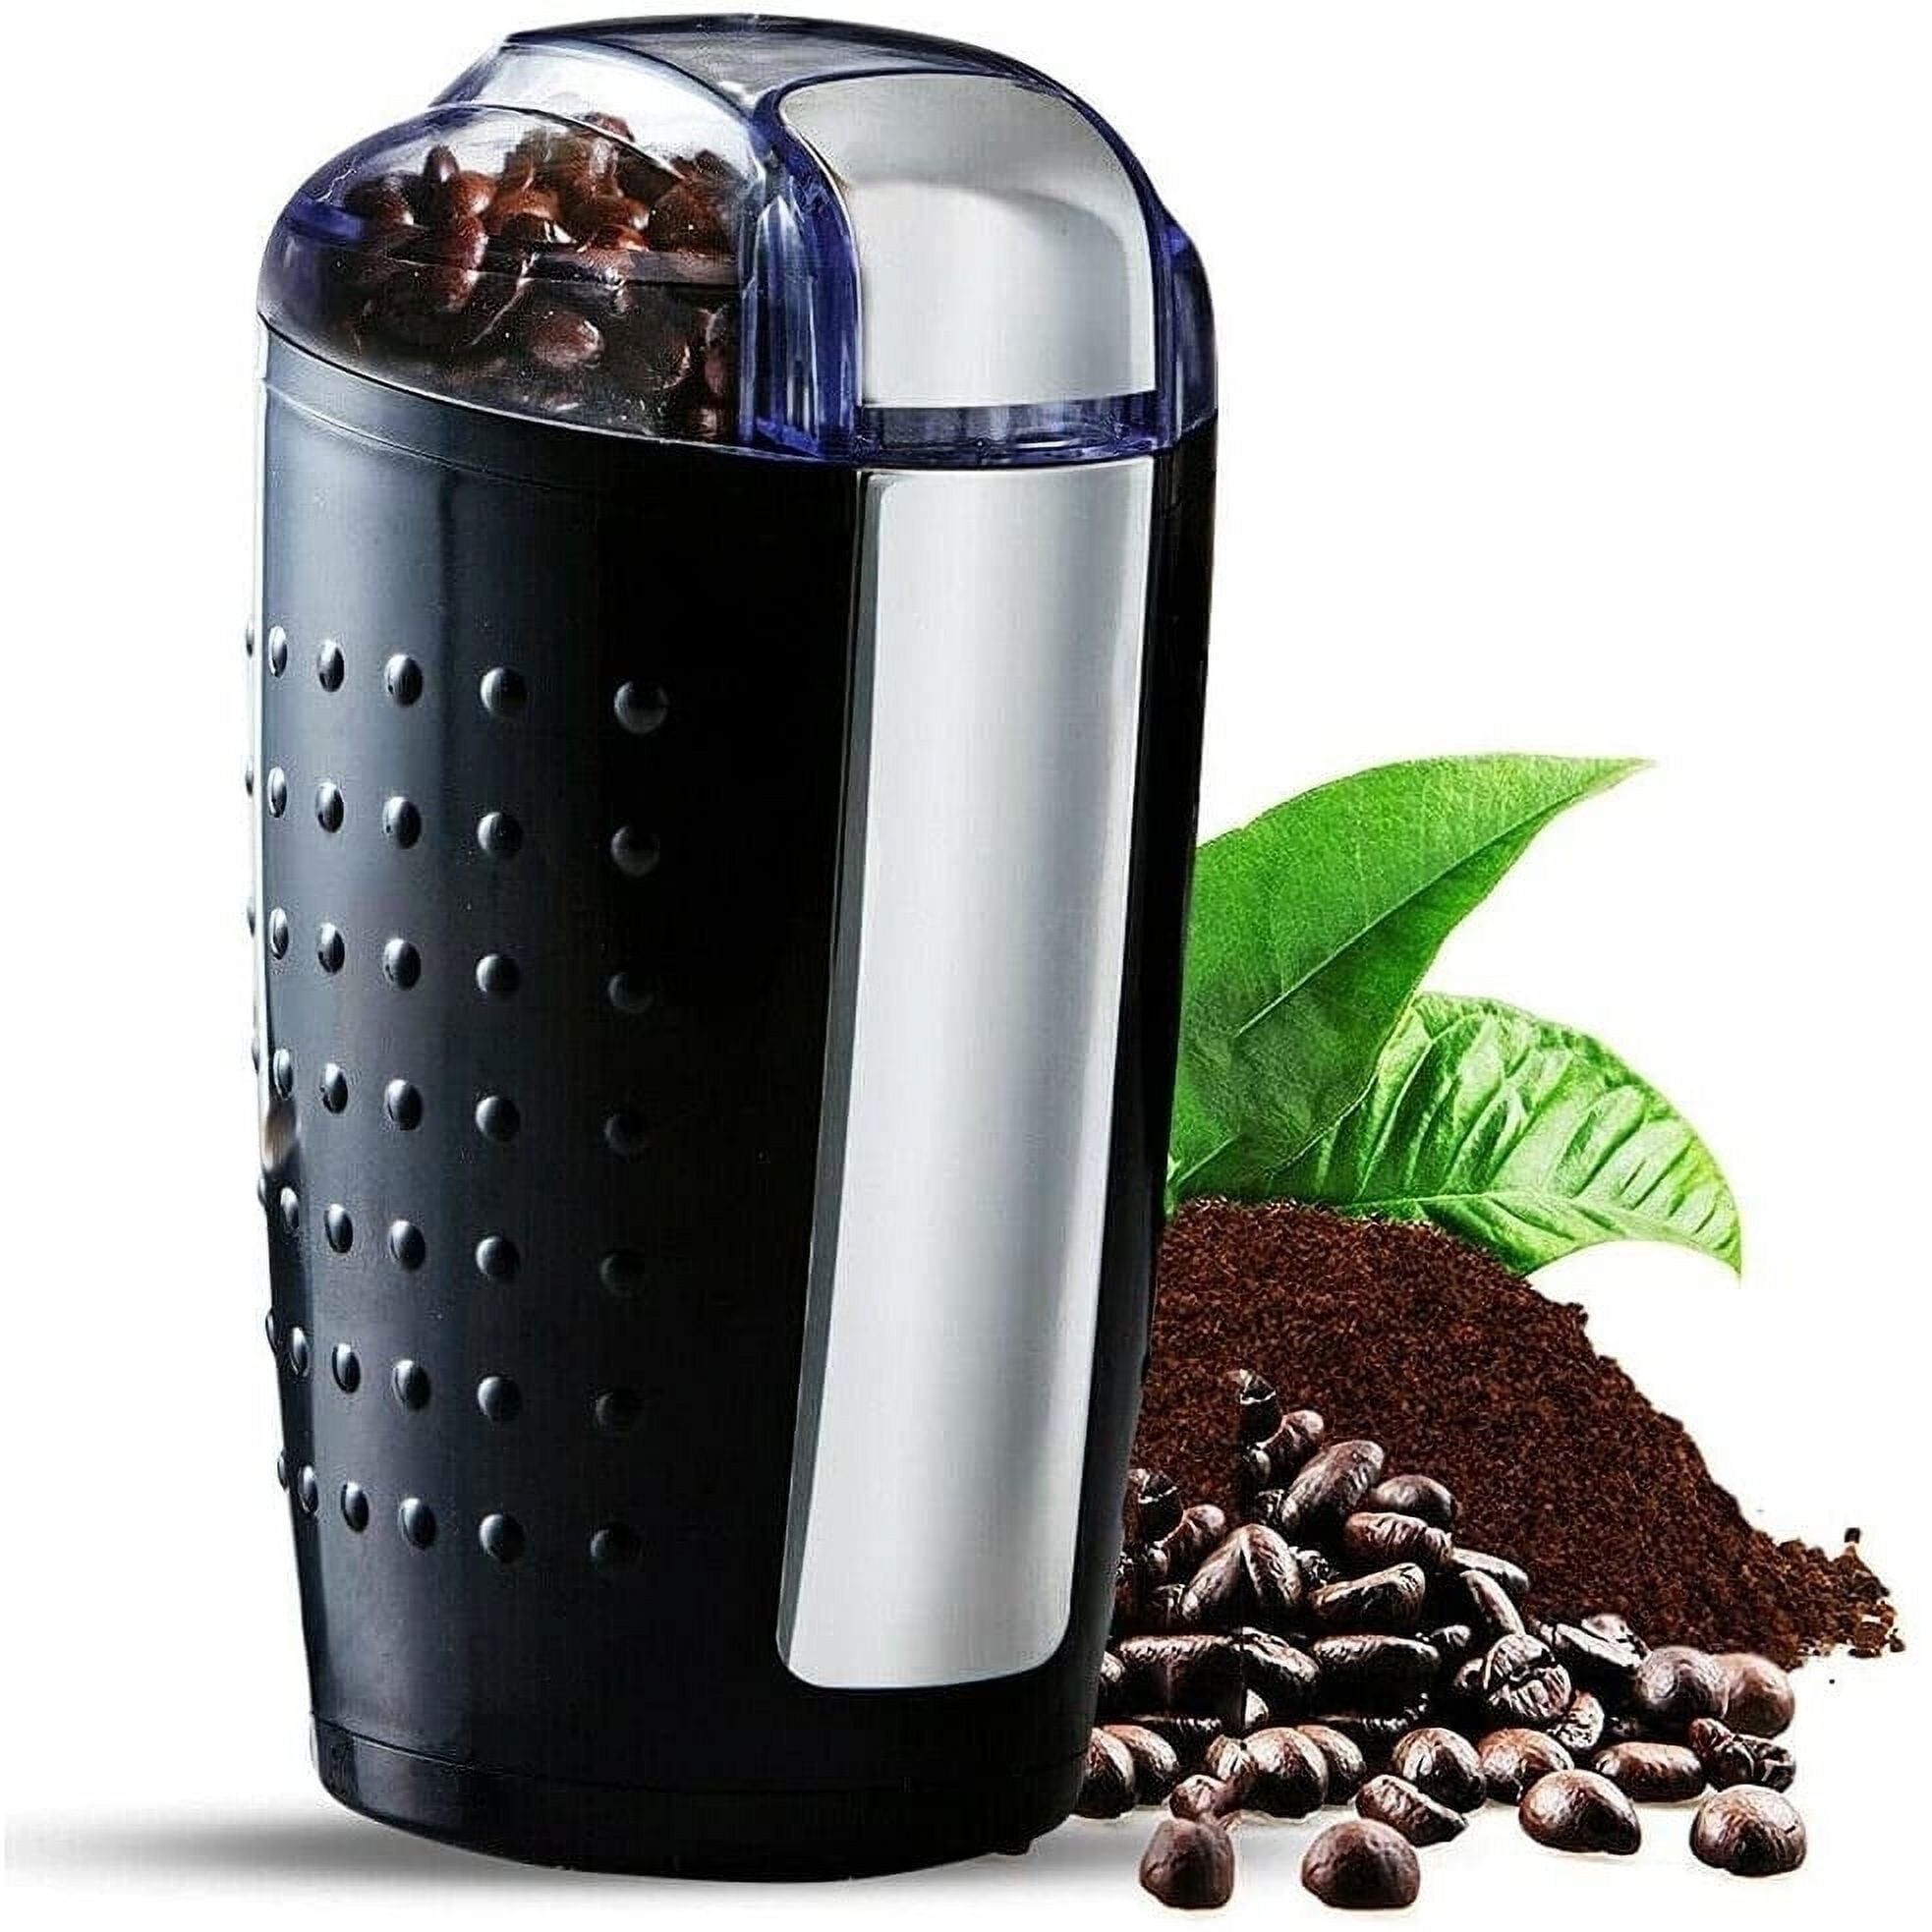 Coffee Grinder Spice Grinder Buy Online- 5 Core